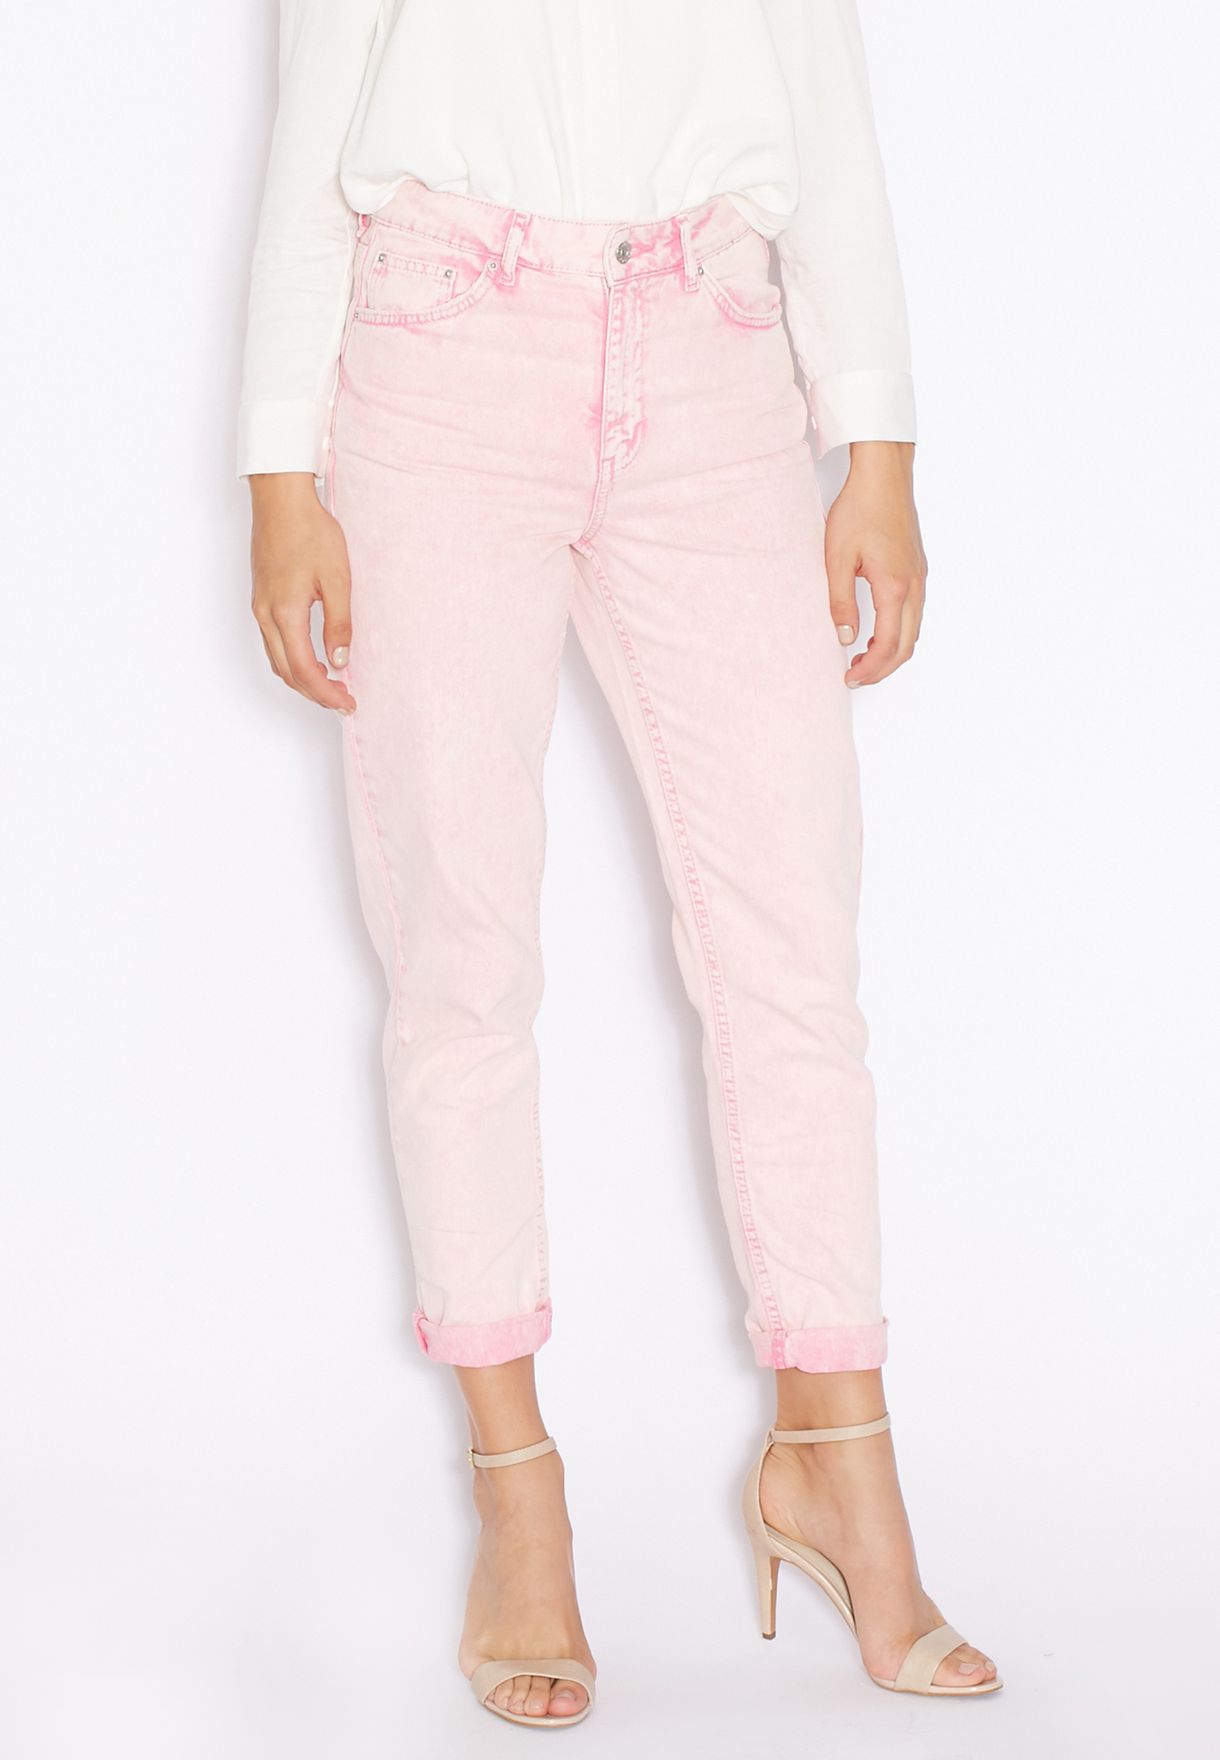 topshop pink jeans